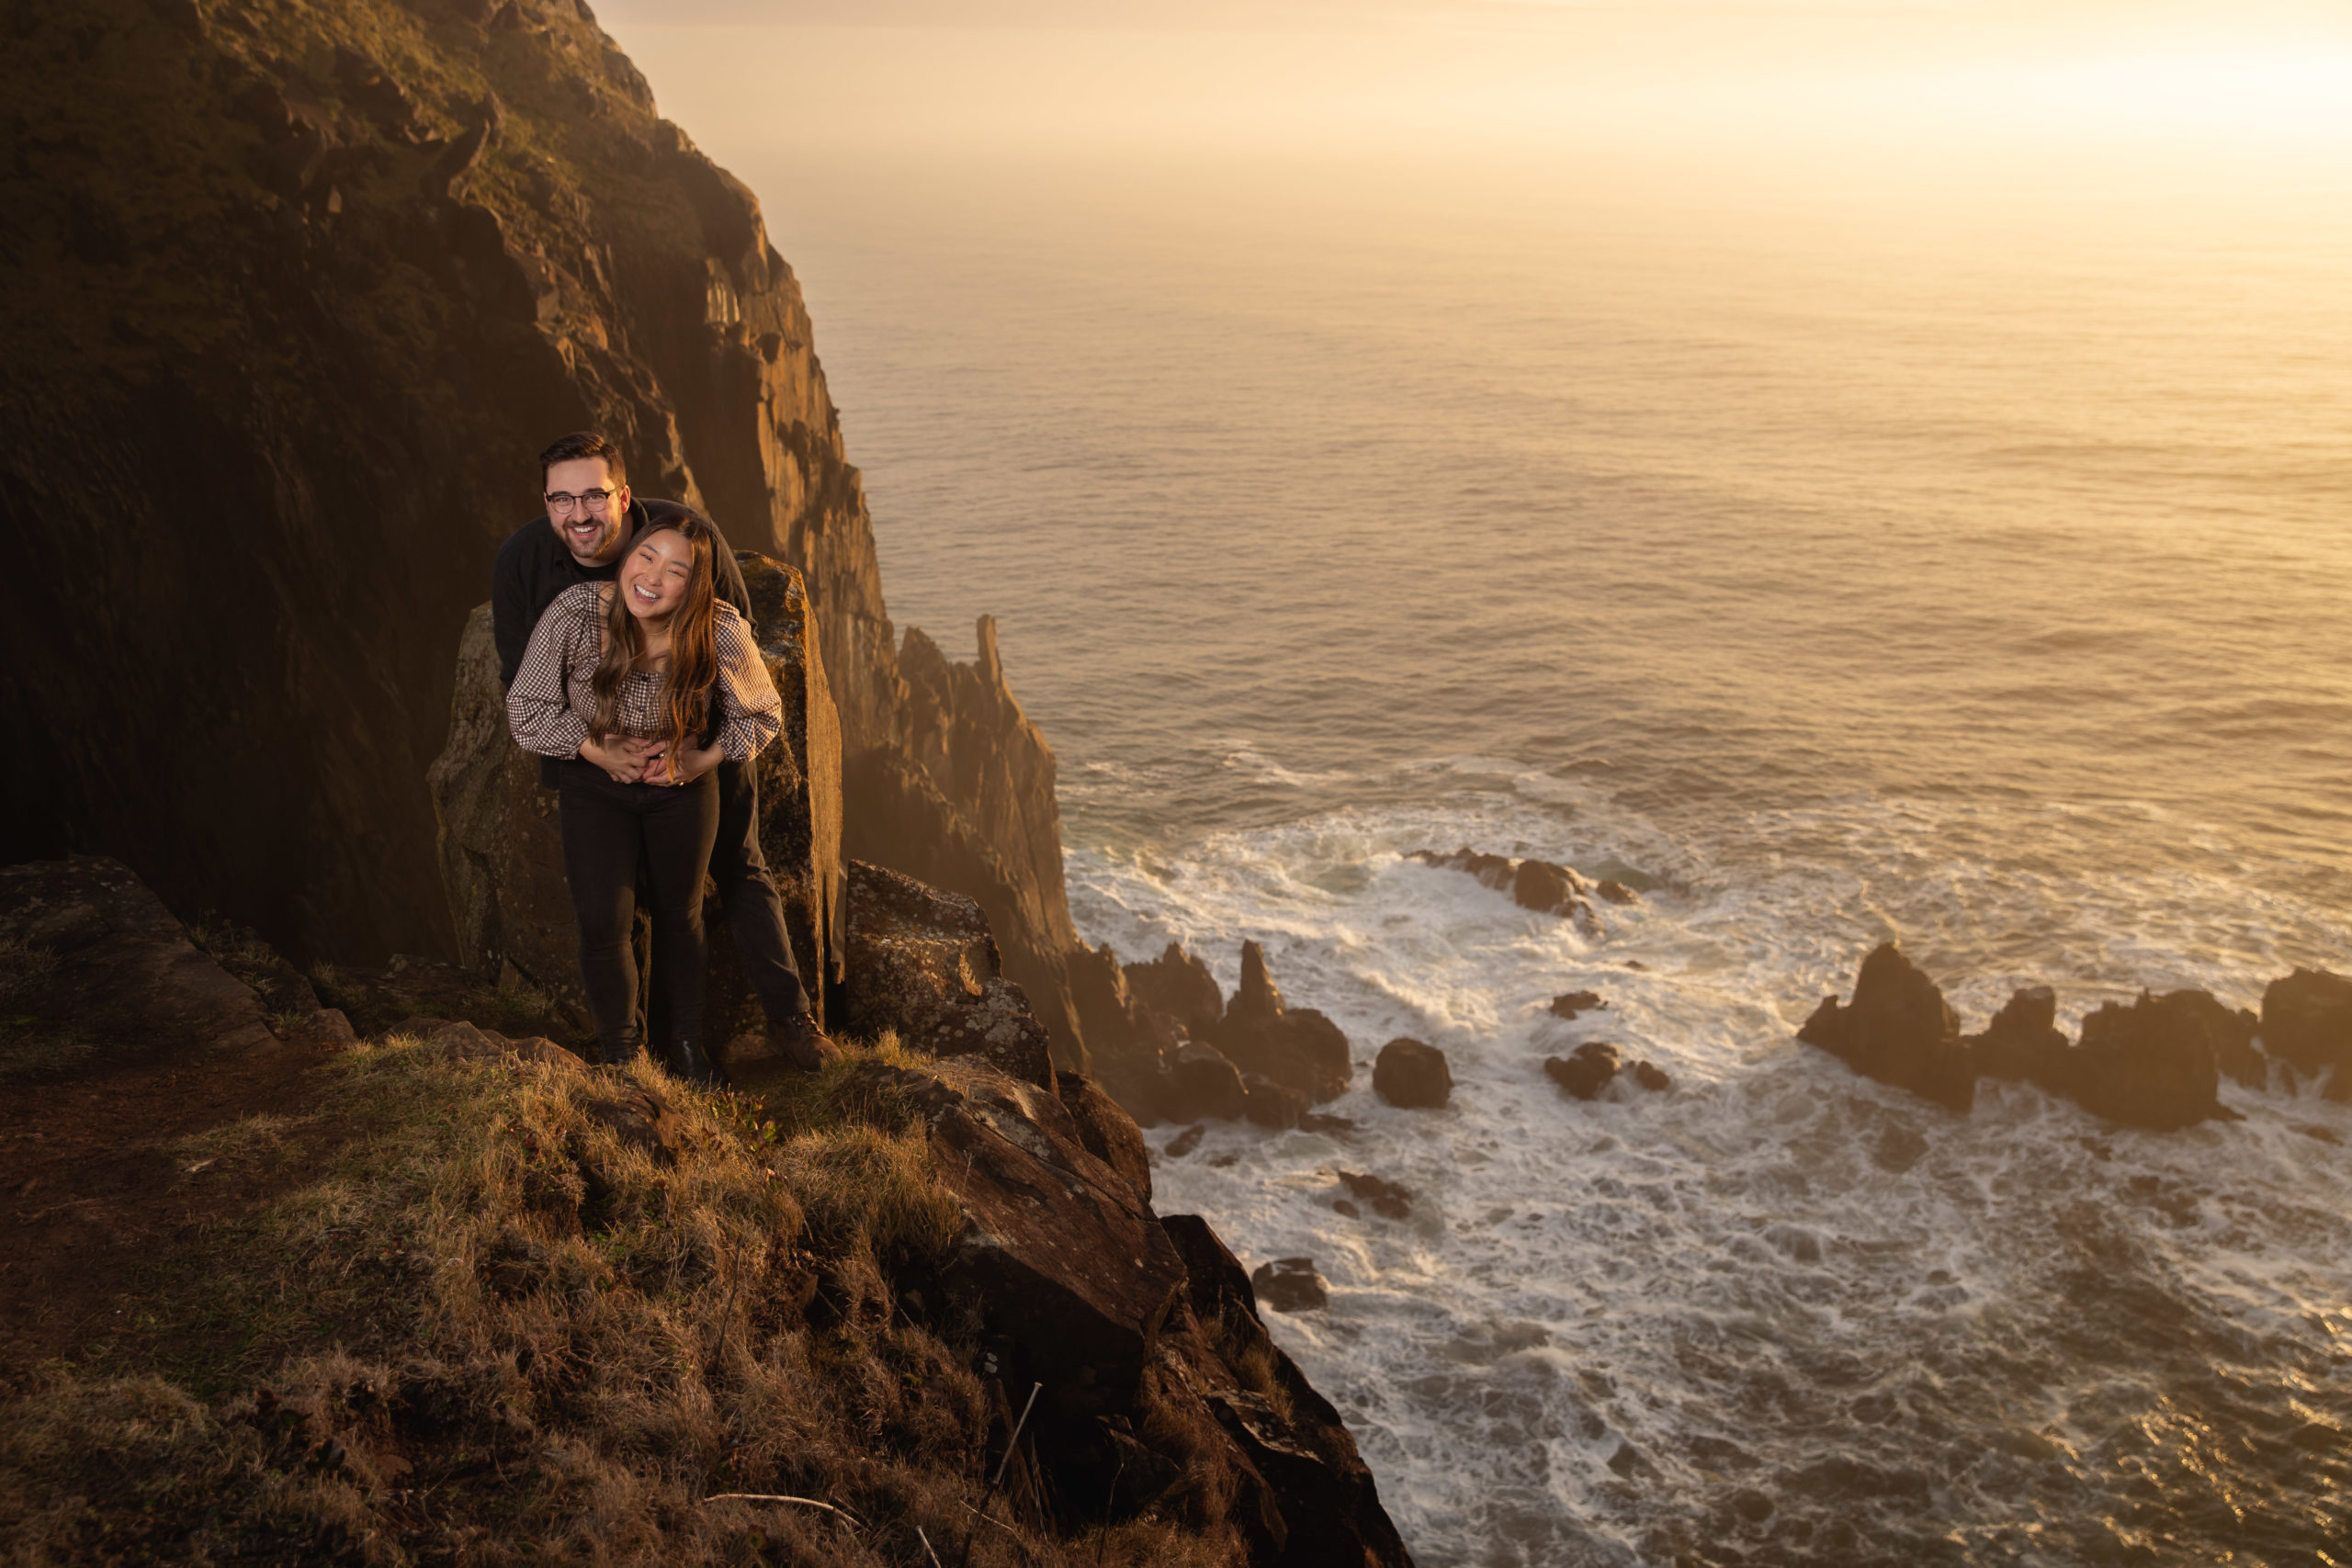 Engagement photography taken at Manzanita Cliffs on the Oregon Coast during sunset